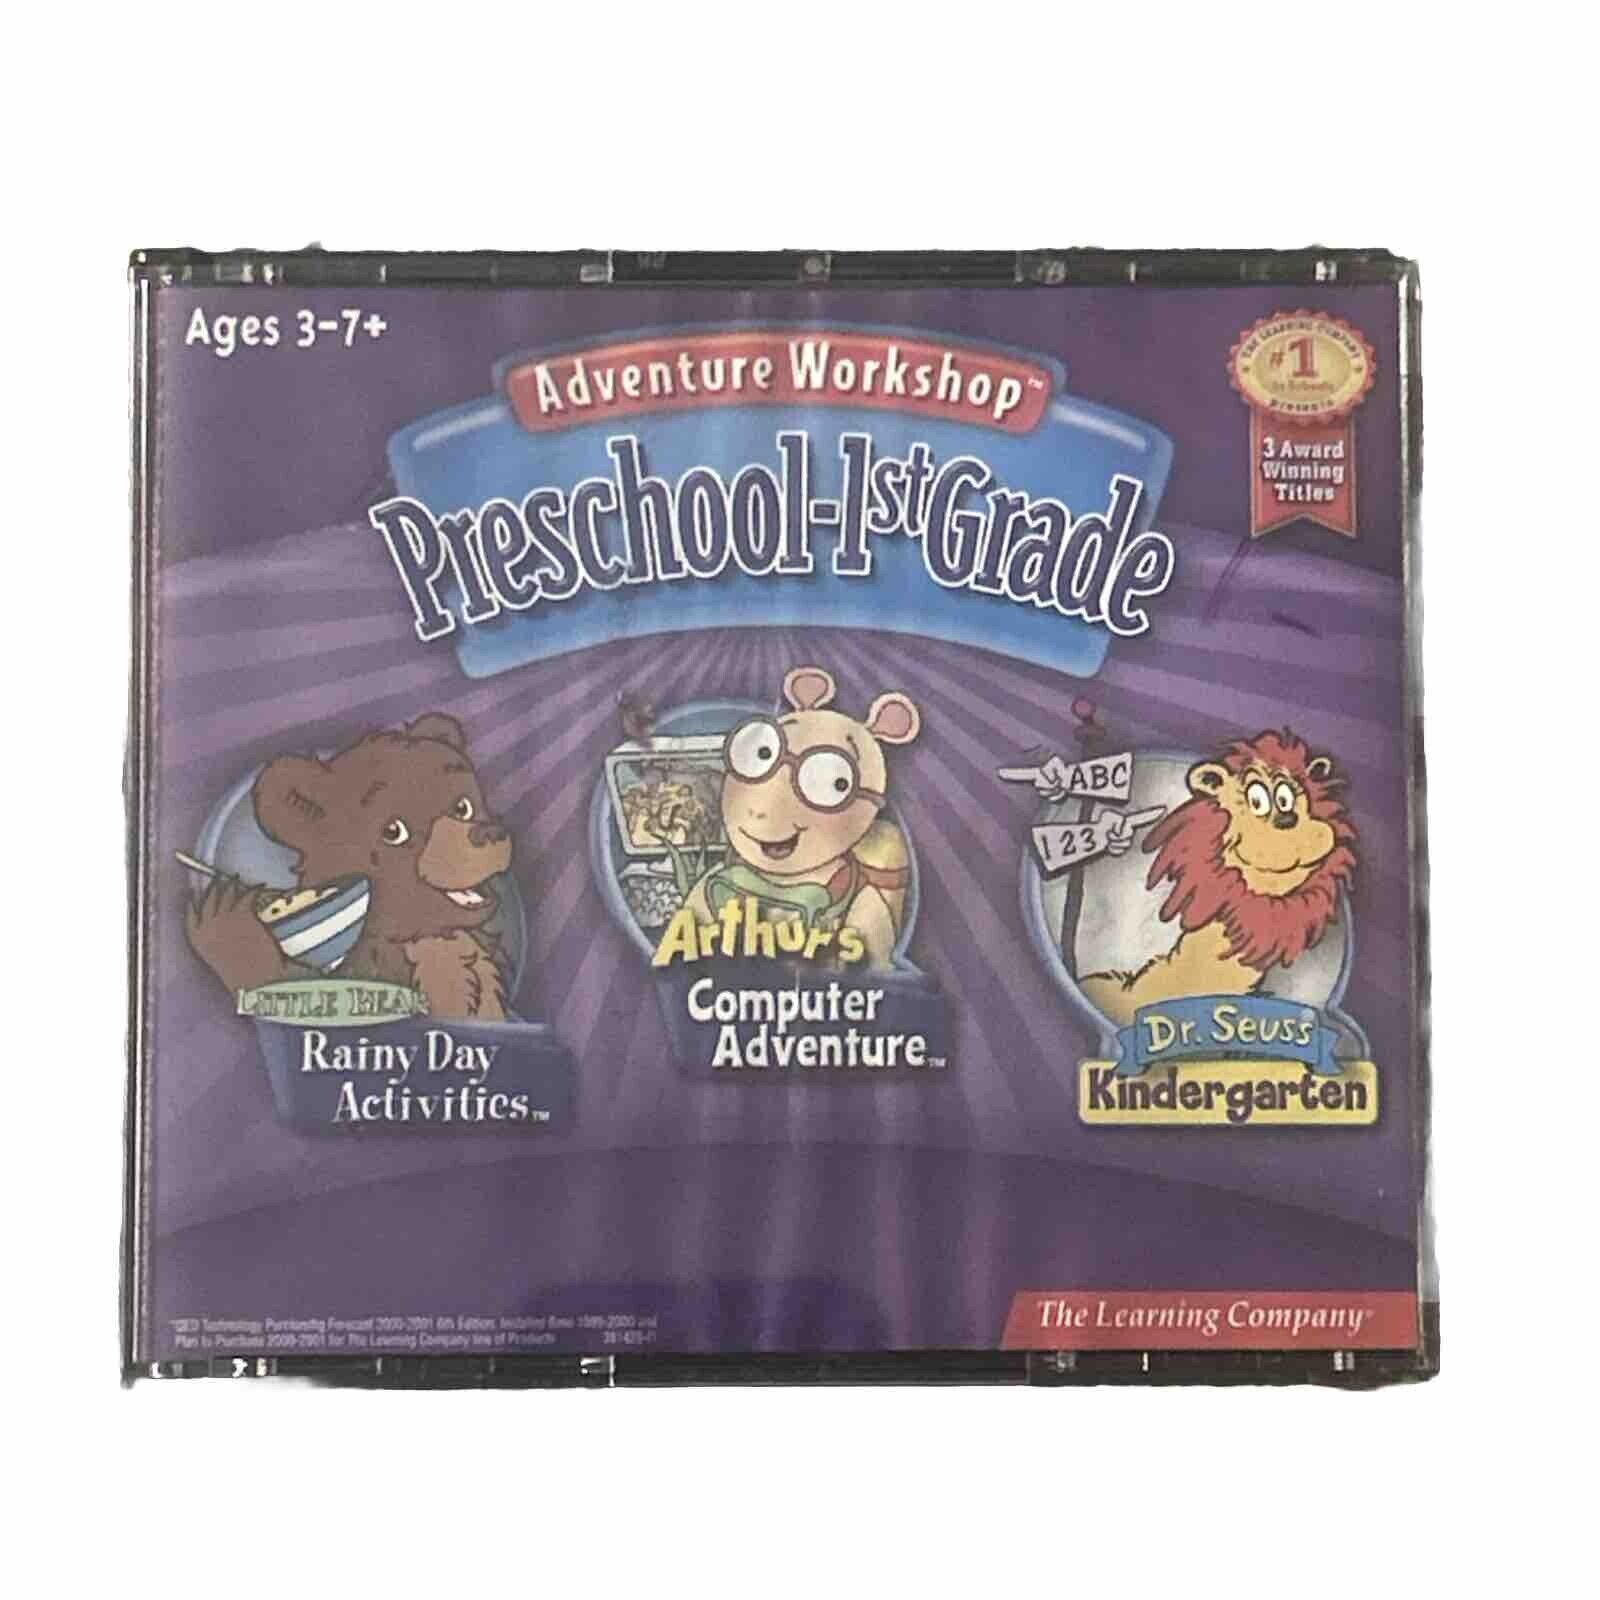 Adventure Workshop, Preschool-1st Grade 3 CD Set (2002, The Learning Company)